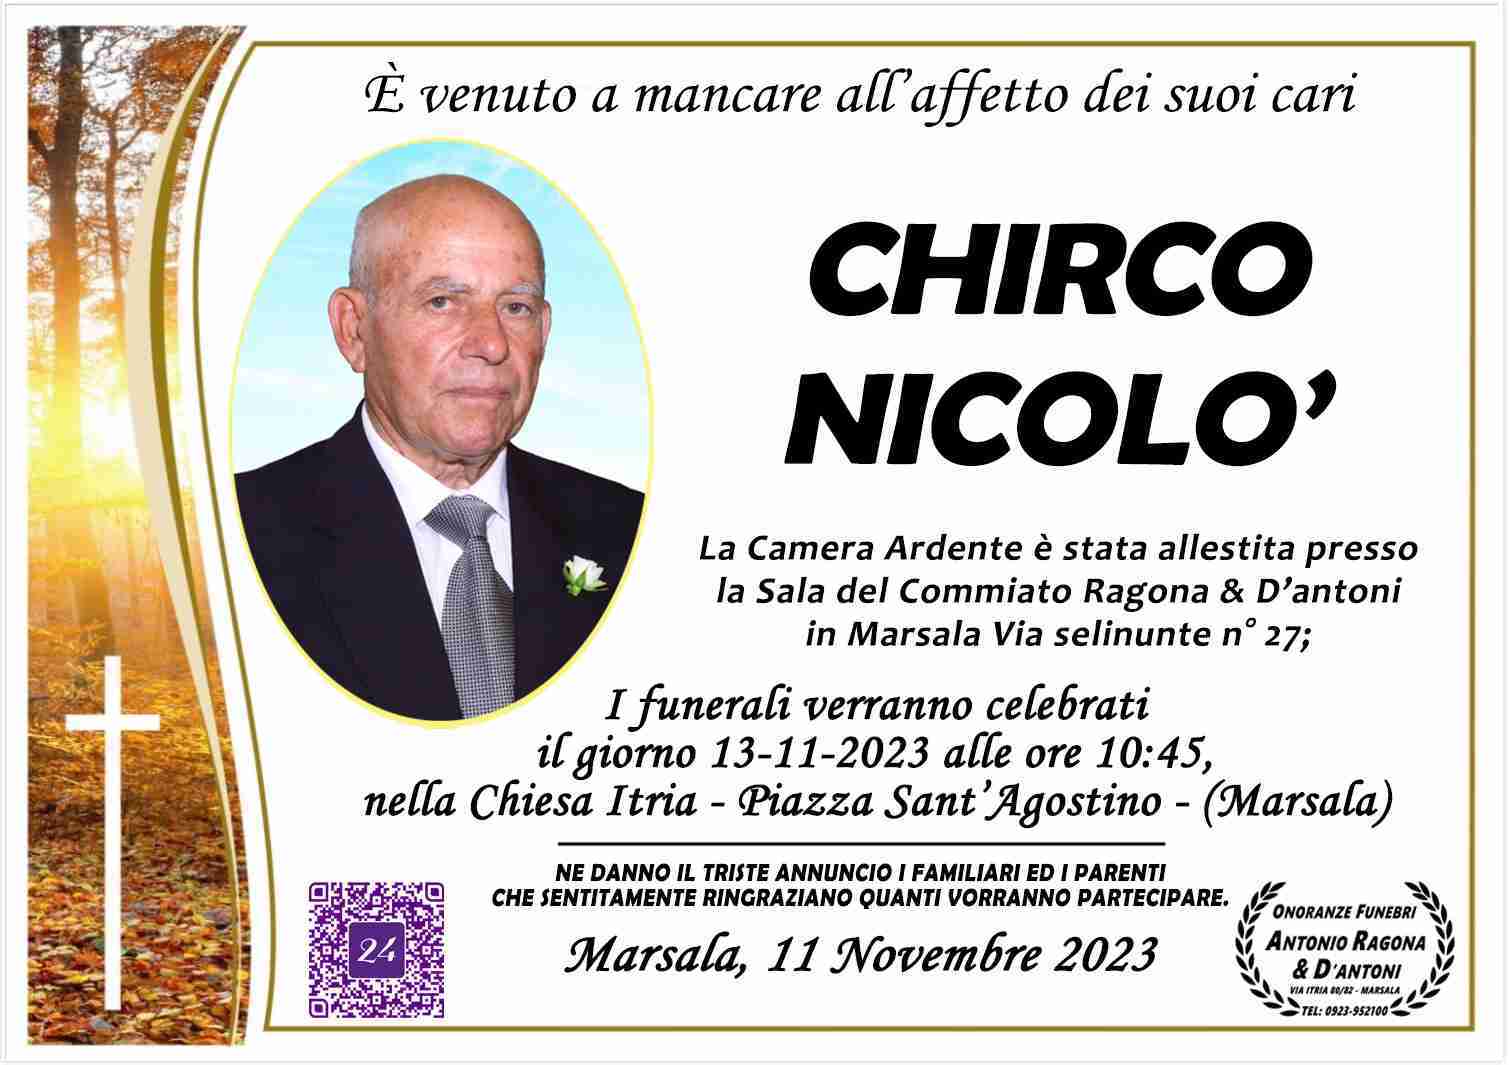 Nicolò Chirco